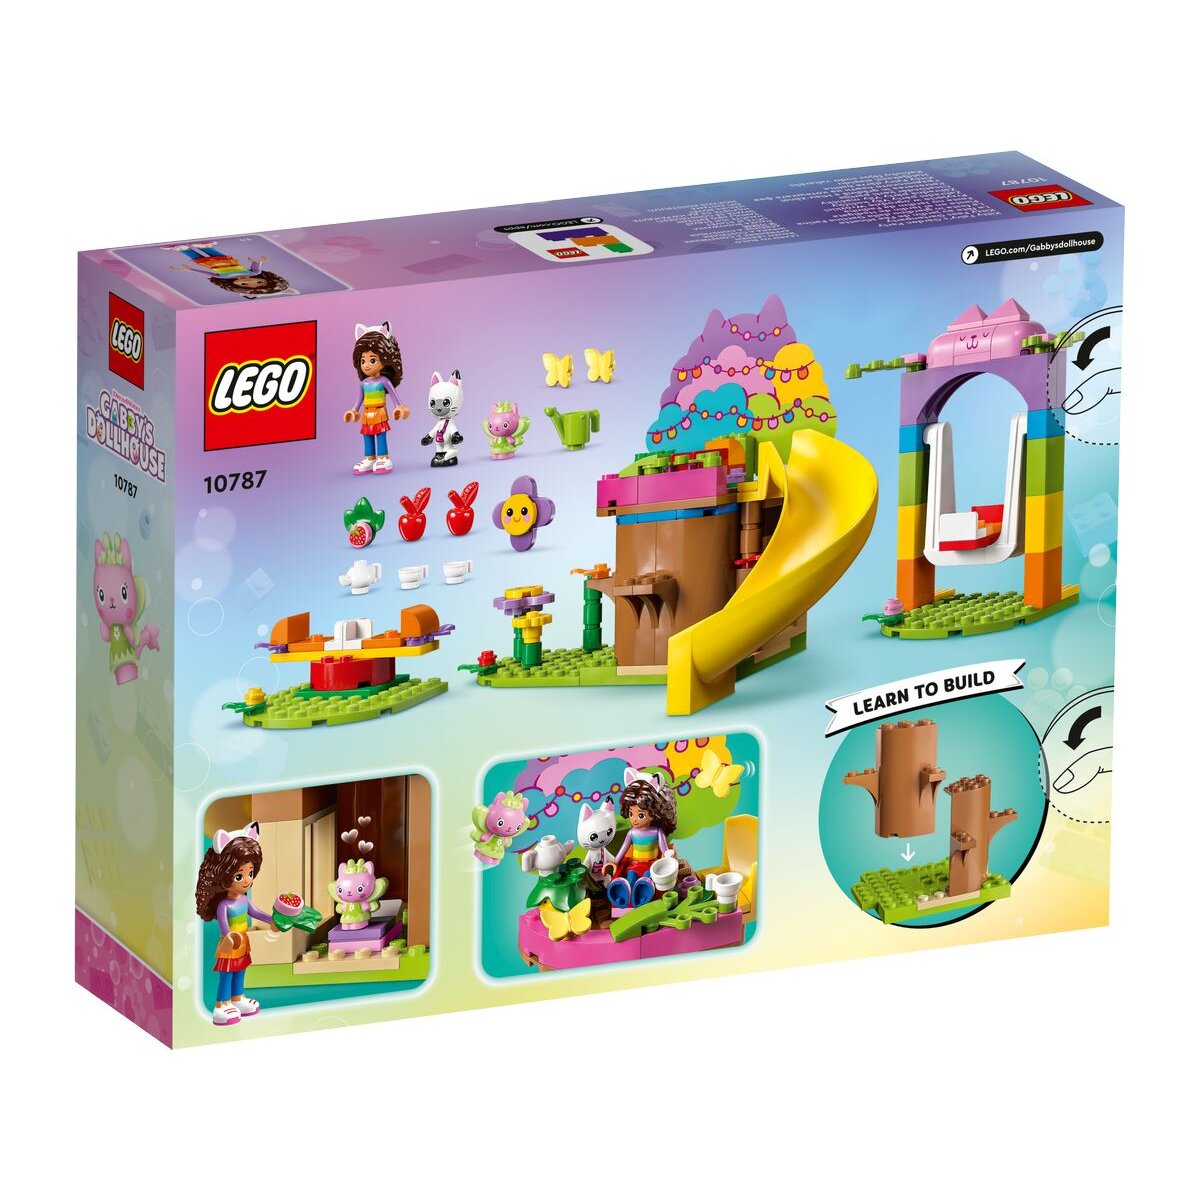 LEGO® Gabby’s Dollhouse 10787 Kitty Fees Gartenparty